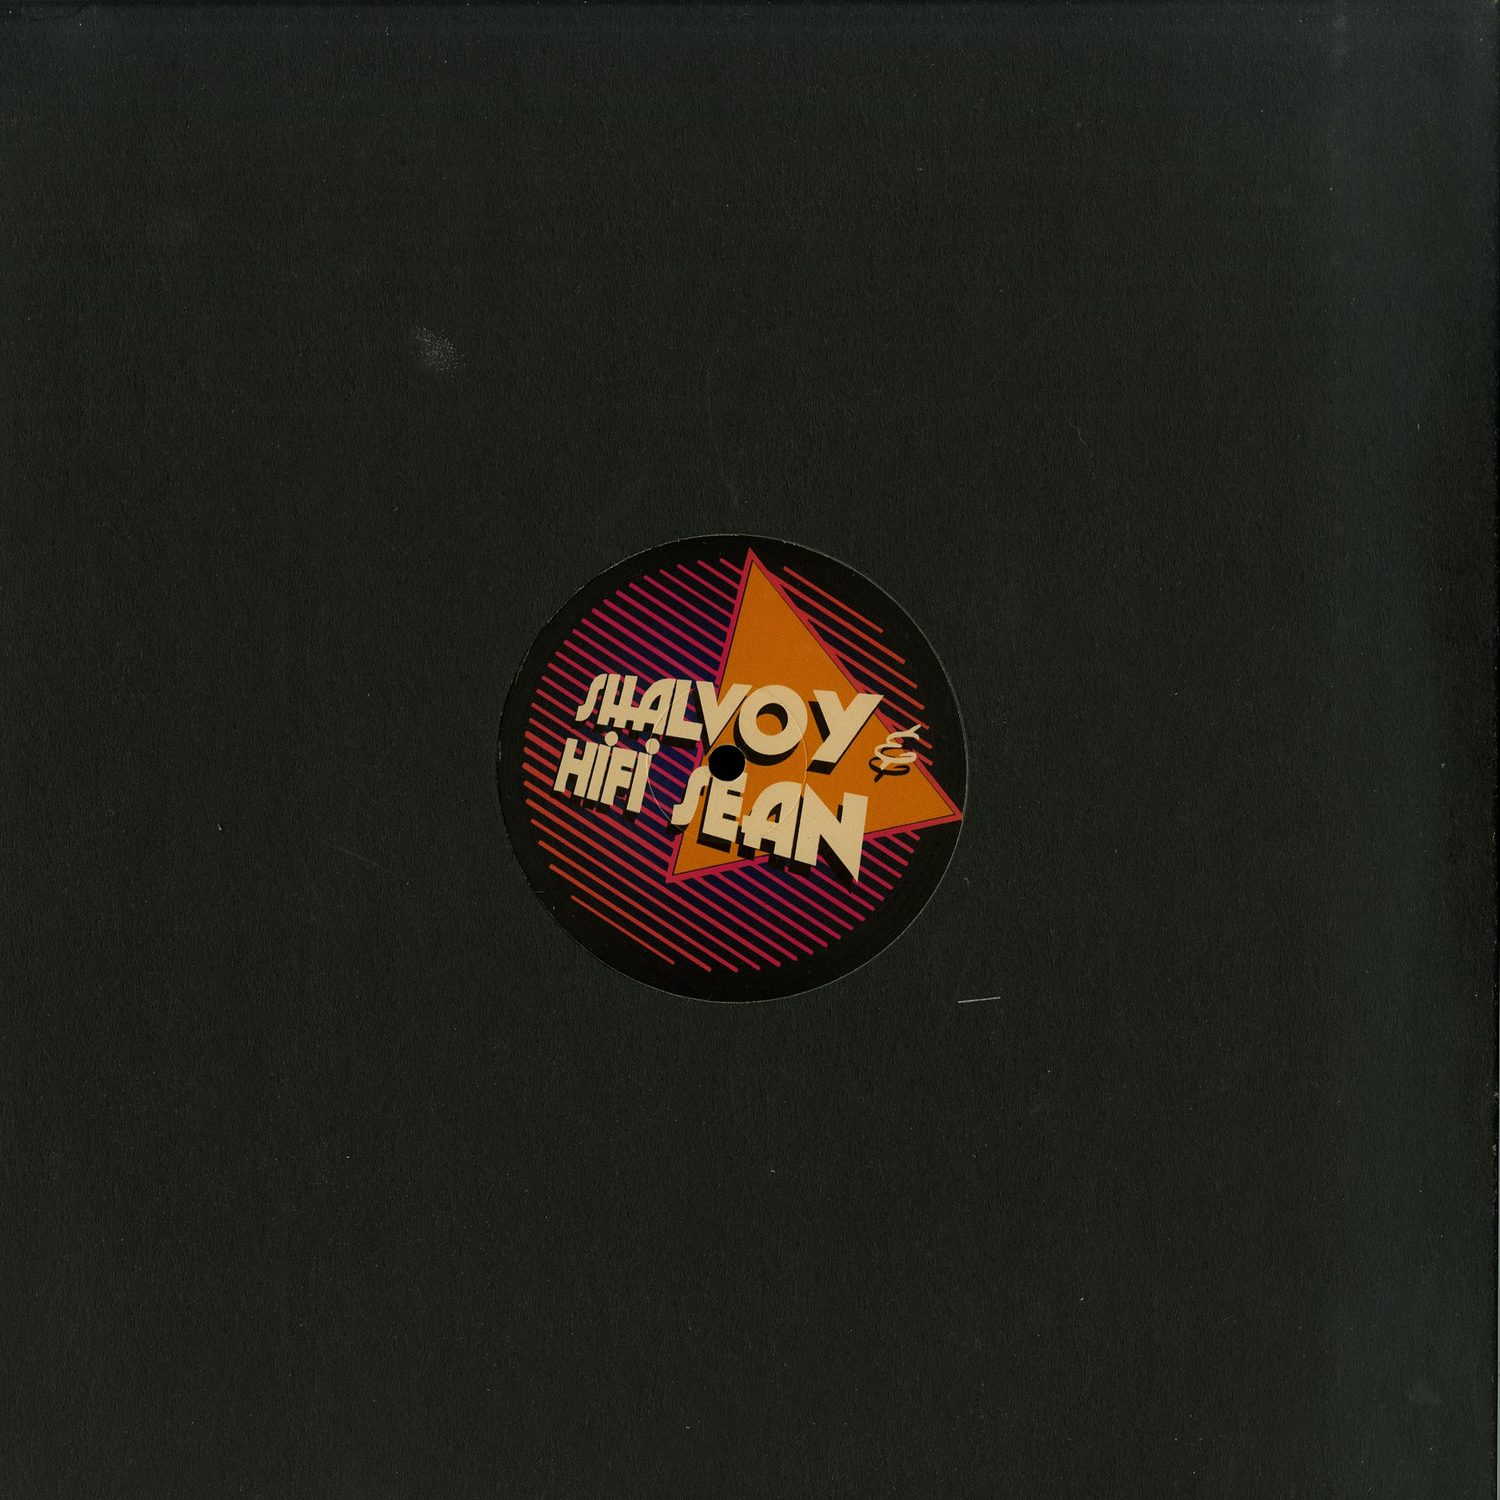 Hifi Sean & Shalvoy - Slipped Discs  Volume 2